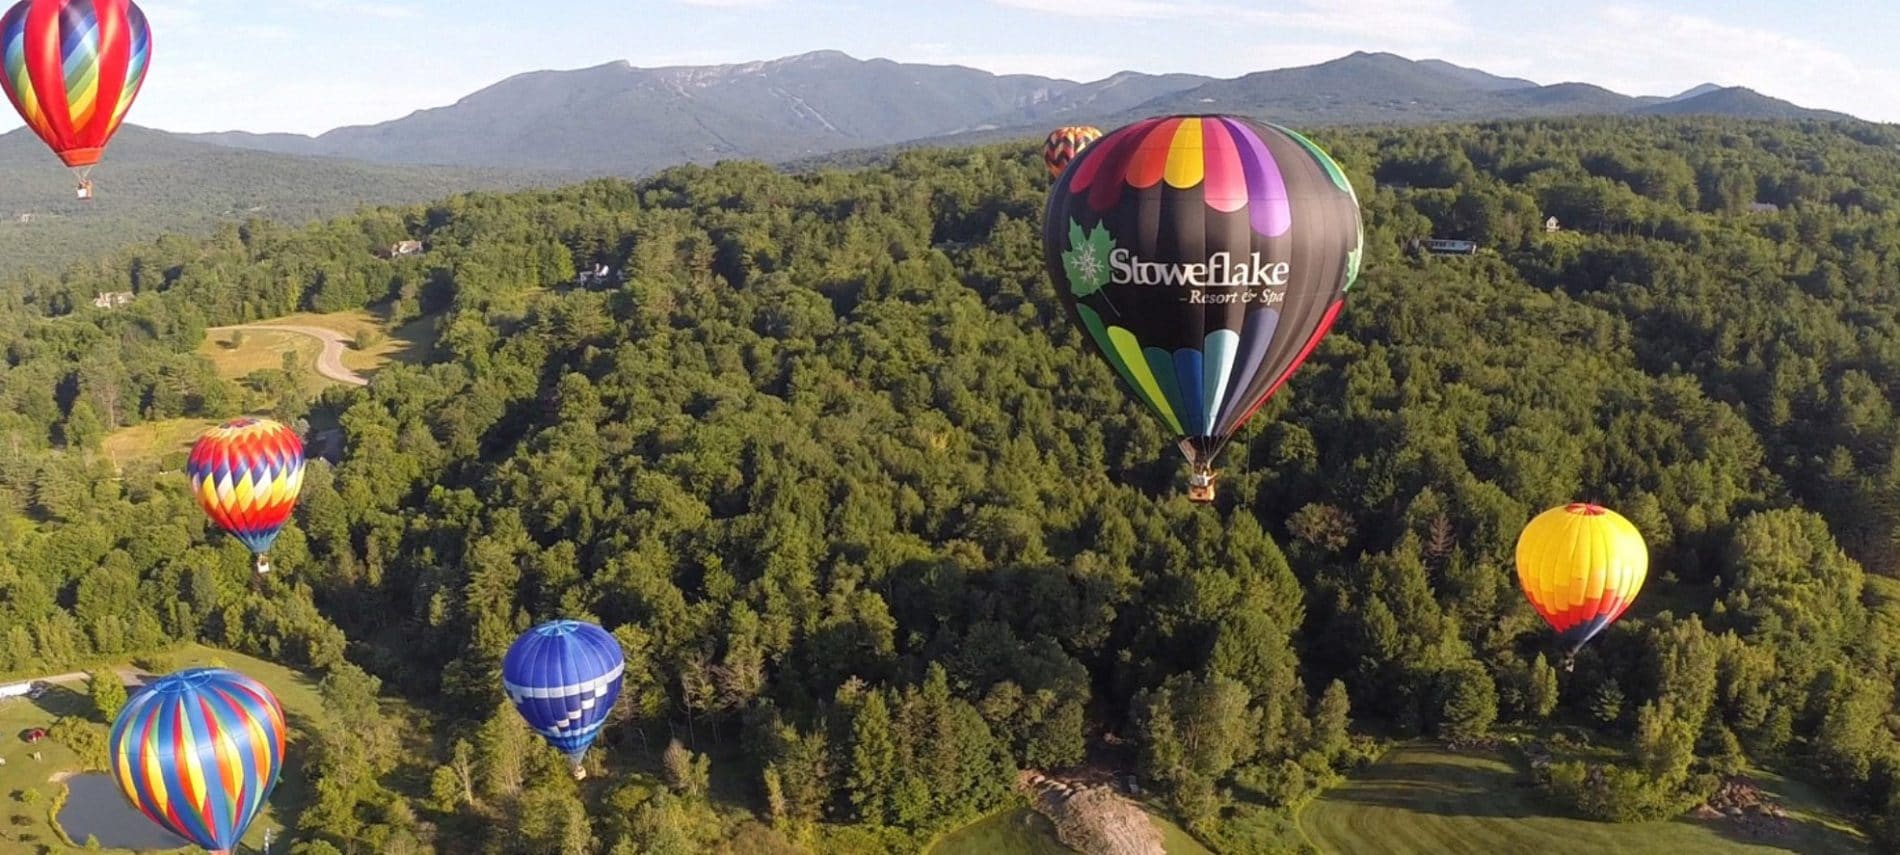 Stoweflake Vermont Hot Air Balloon Festival 2019